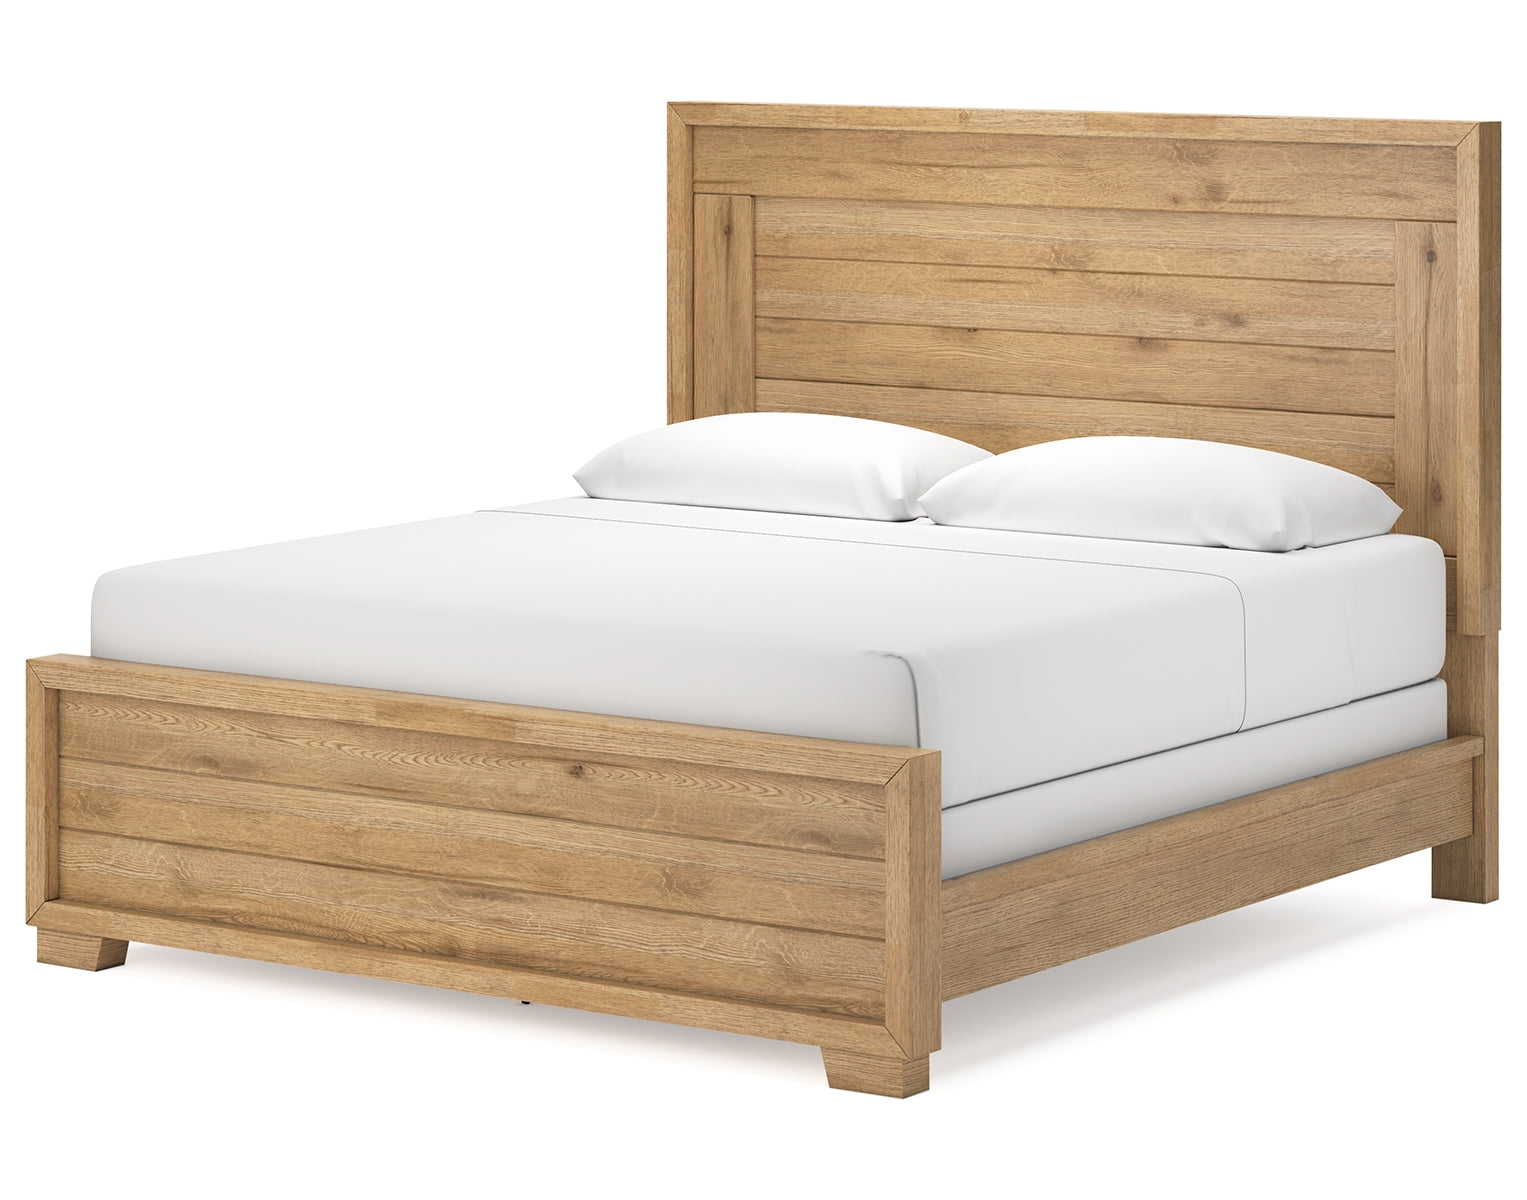 Galliden King Panel Bed with Dresser